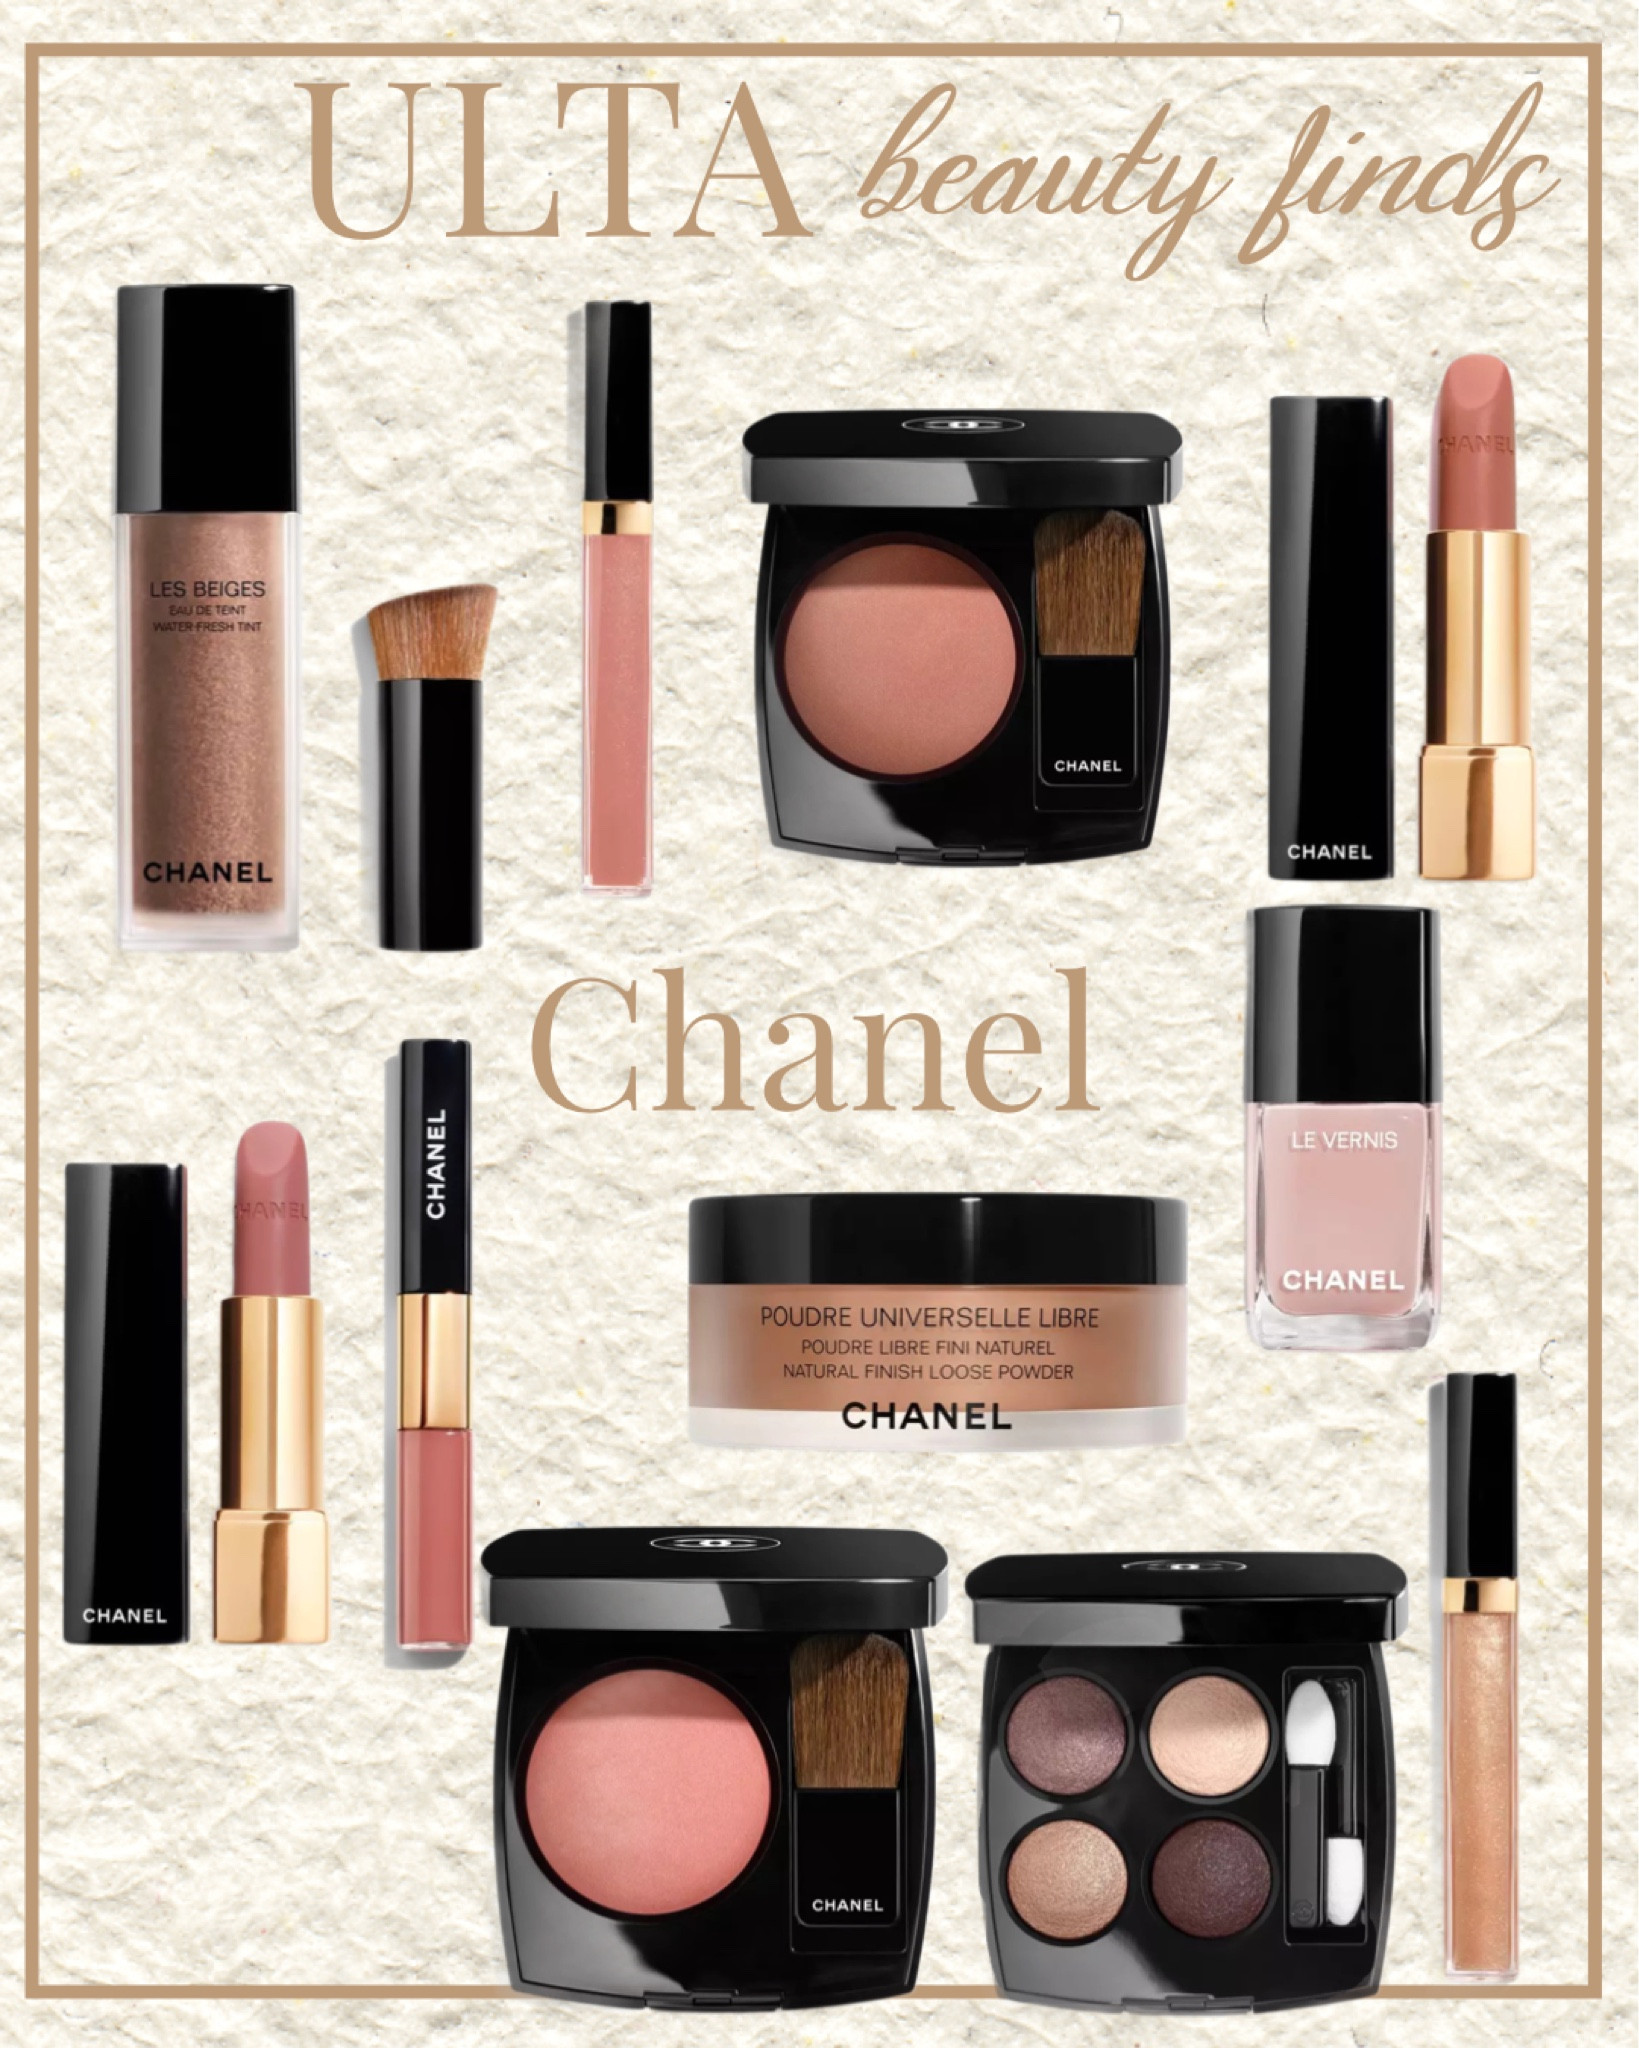 Chanel to grace shelves at Ulta Beauty - Global Cosmetics News